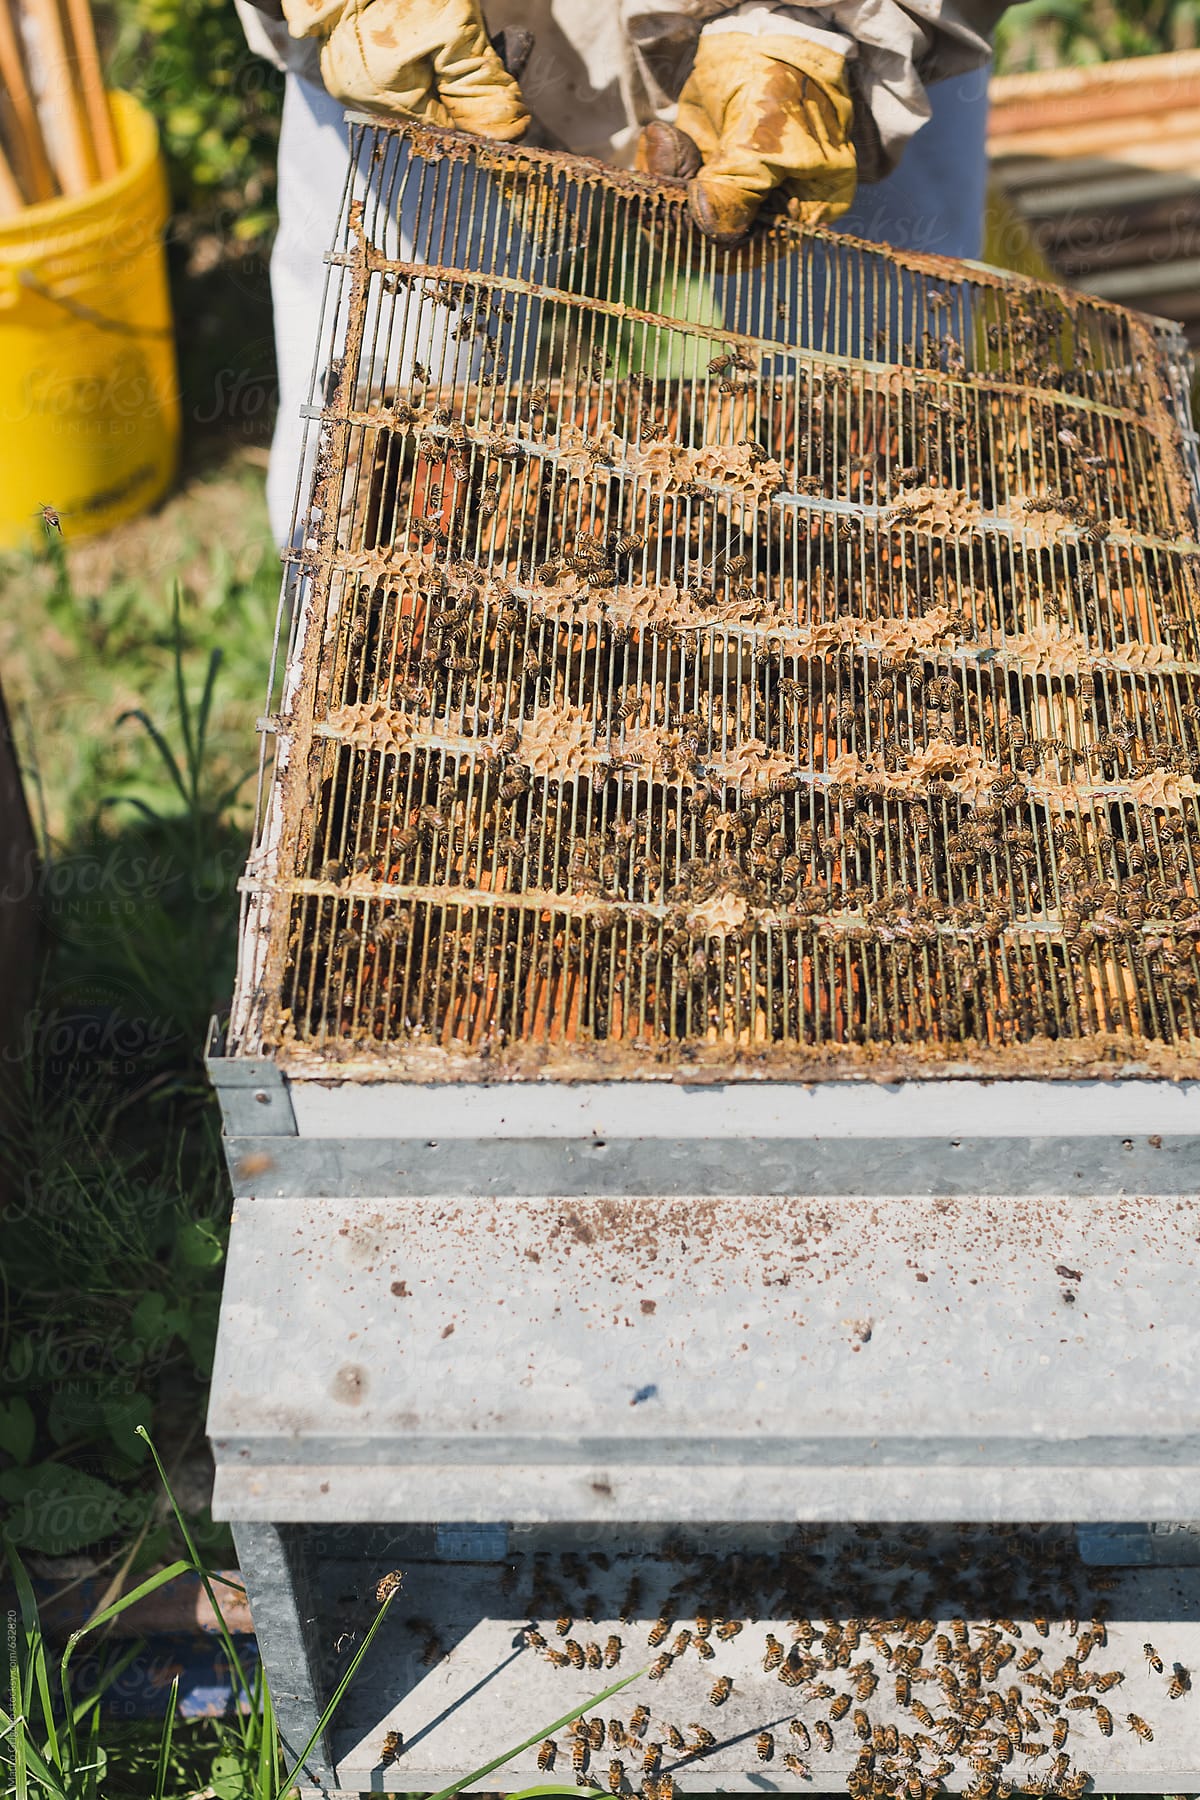 Farmer adjust the hives